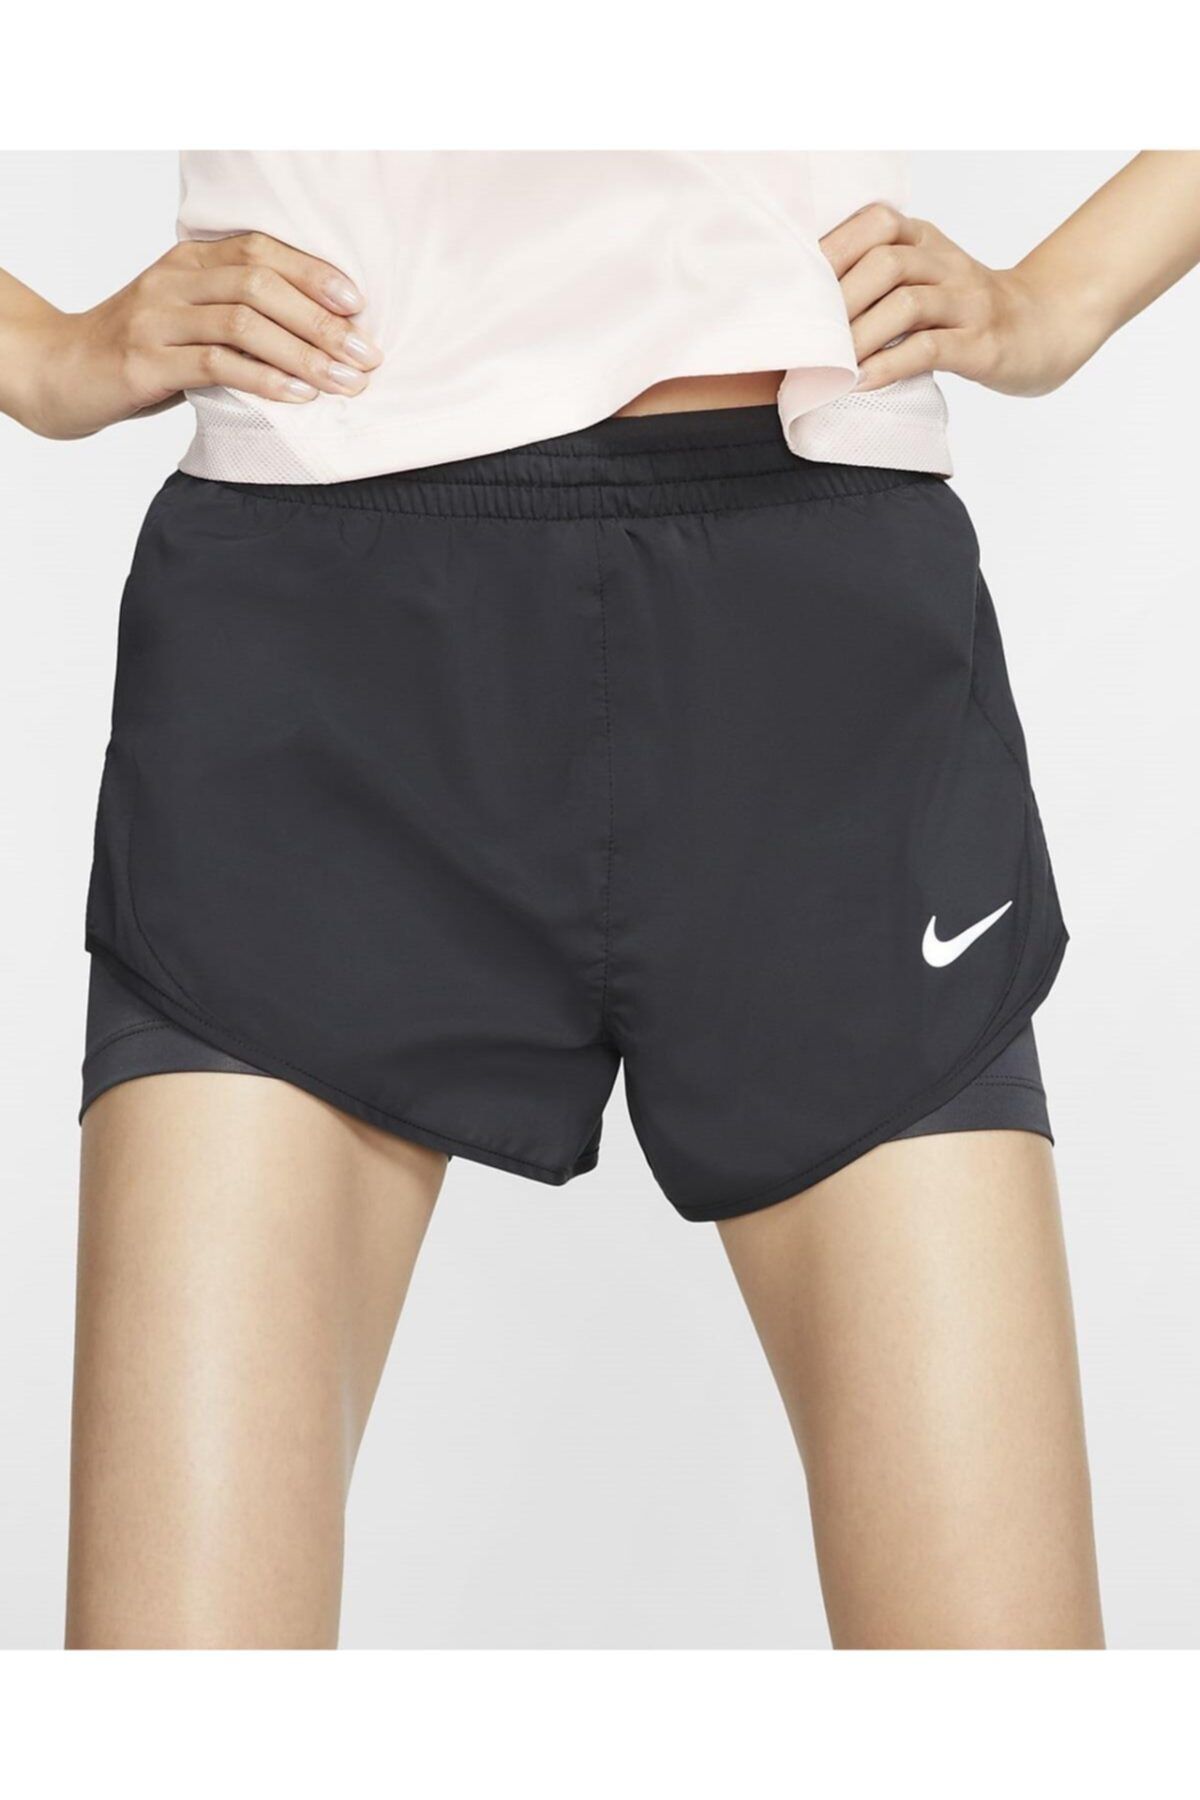 Жесткие шорты. Nike tempo Luxe women's Running shorts. Nike 2 in 1 Running short. Nike Flex шорты 2020. Шорты Nike Dri Fit женские.